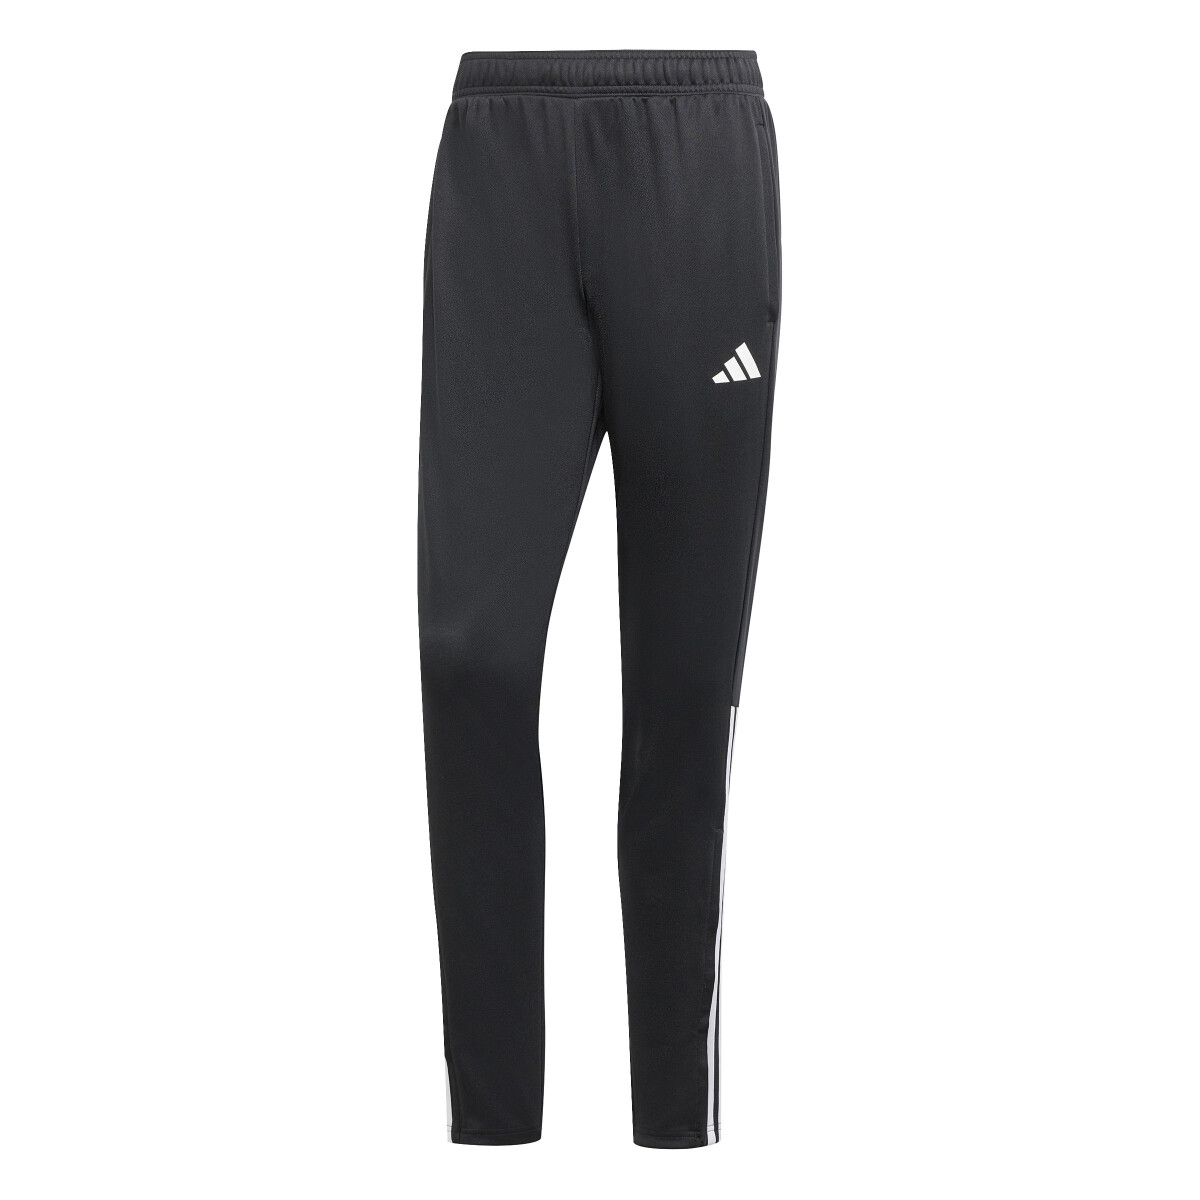 Pantalon Sereno Cut 3 Adidas - Negro/Blanco 